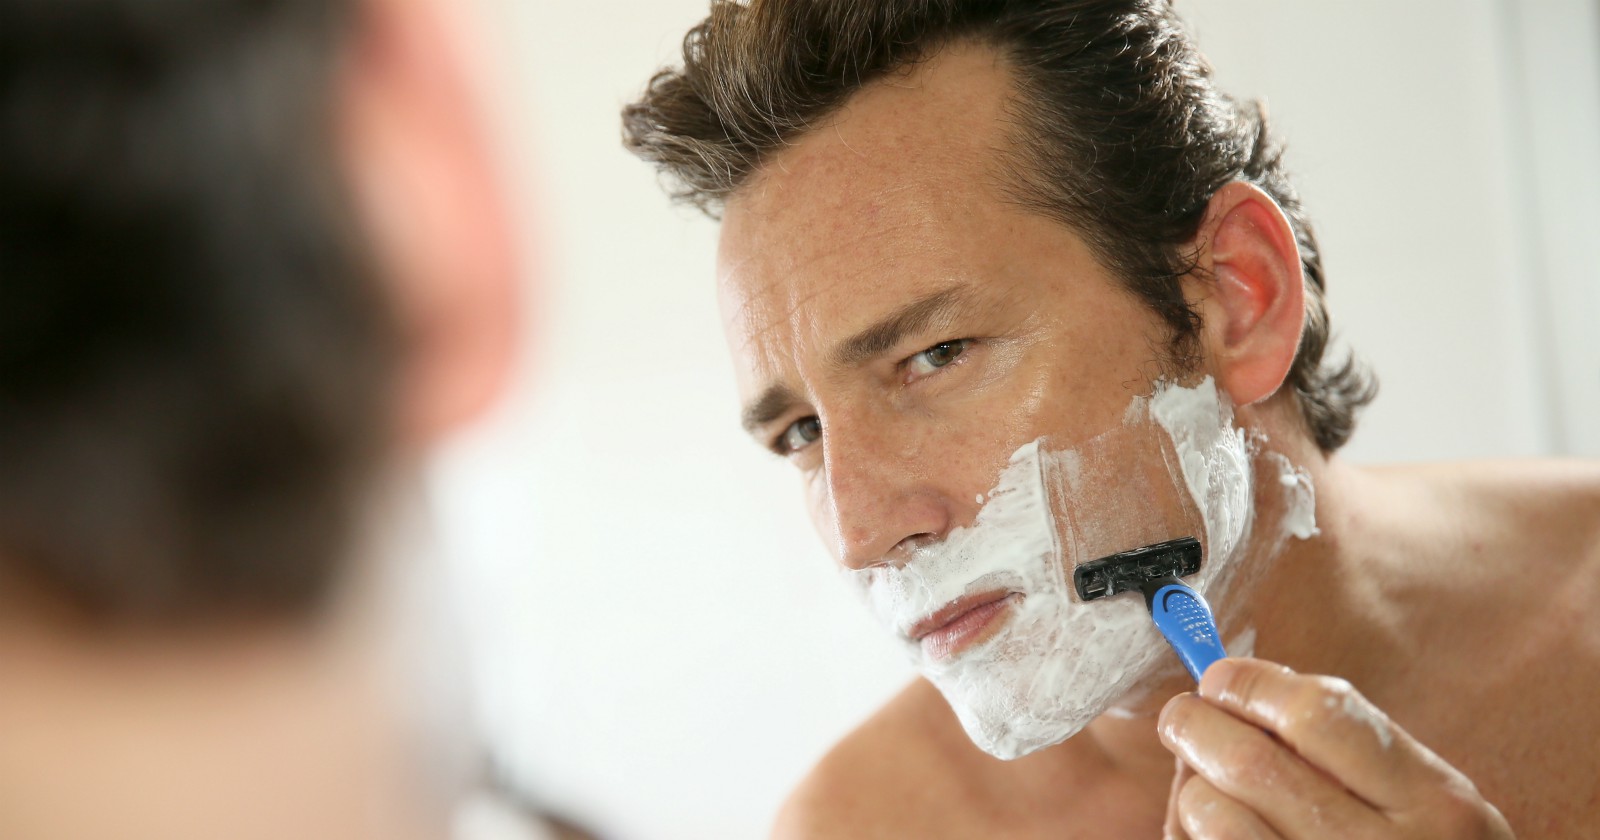 Closest shave yet – LinkedIn